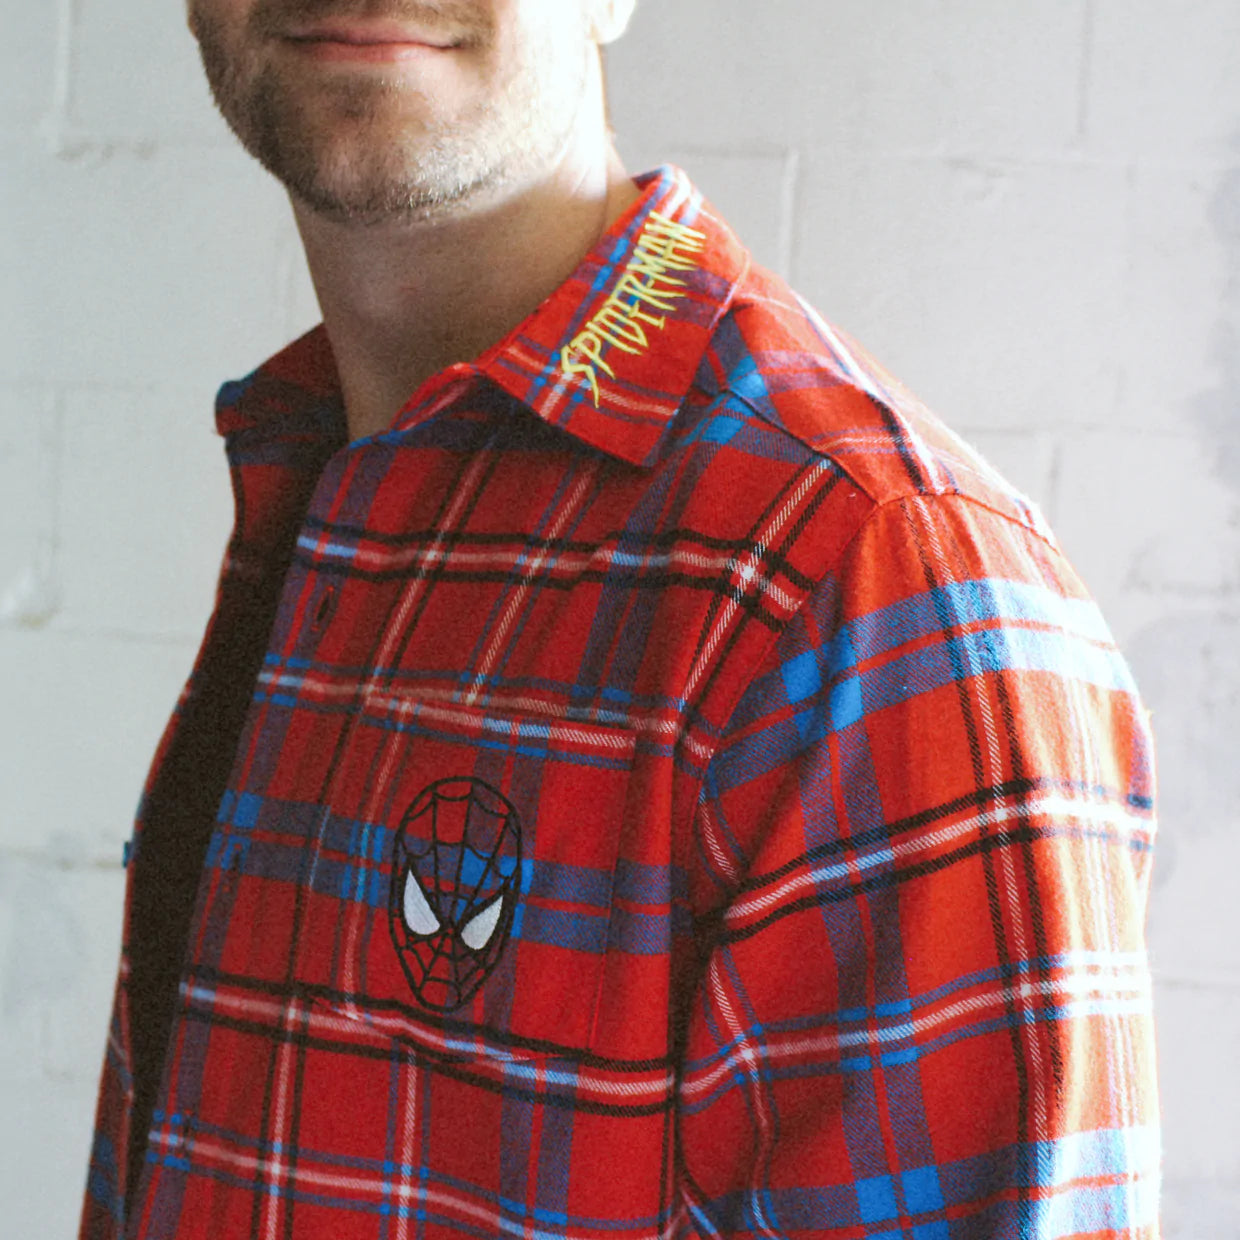 Spider-Man Flannel Shirt by Cakeworthy